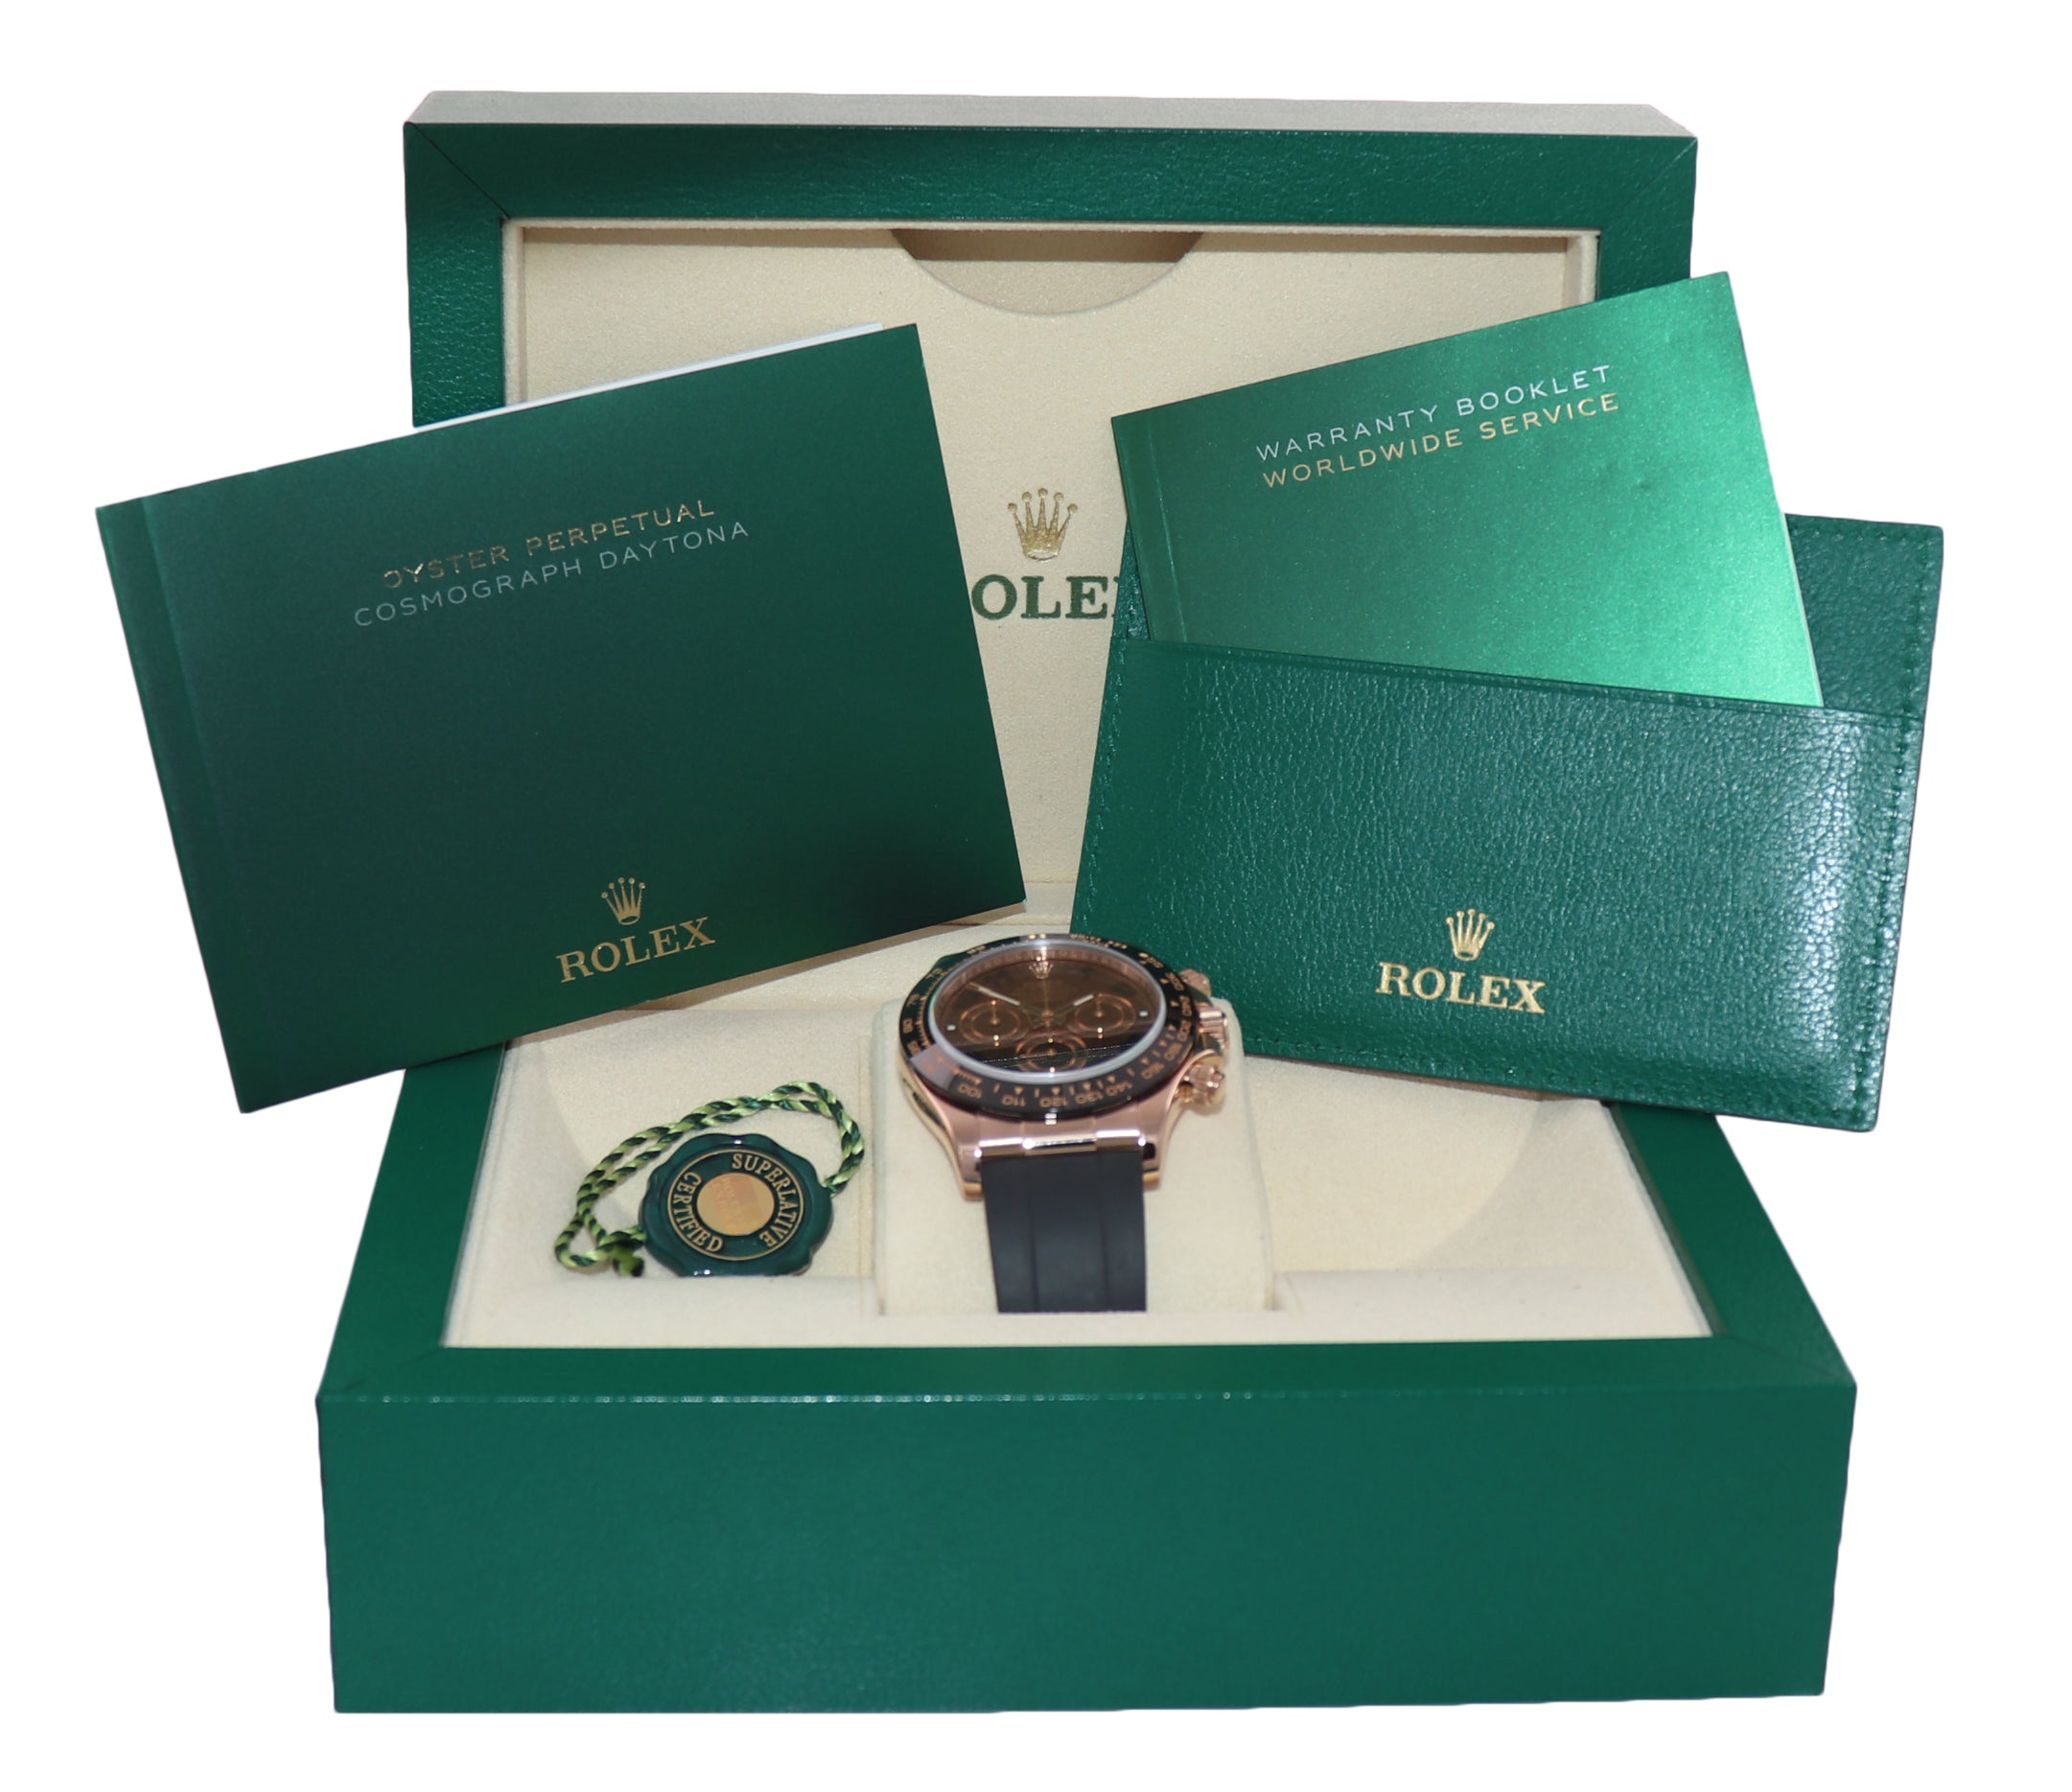 2016 Rolex Daytona Chocolate Oysterflex Ceramic 116515 18K Rose Gold 40mm Watch